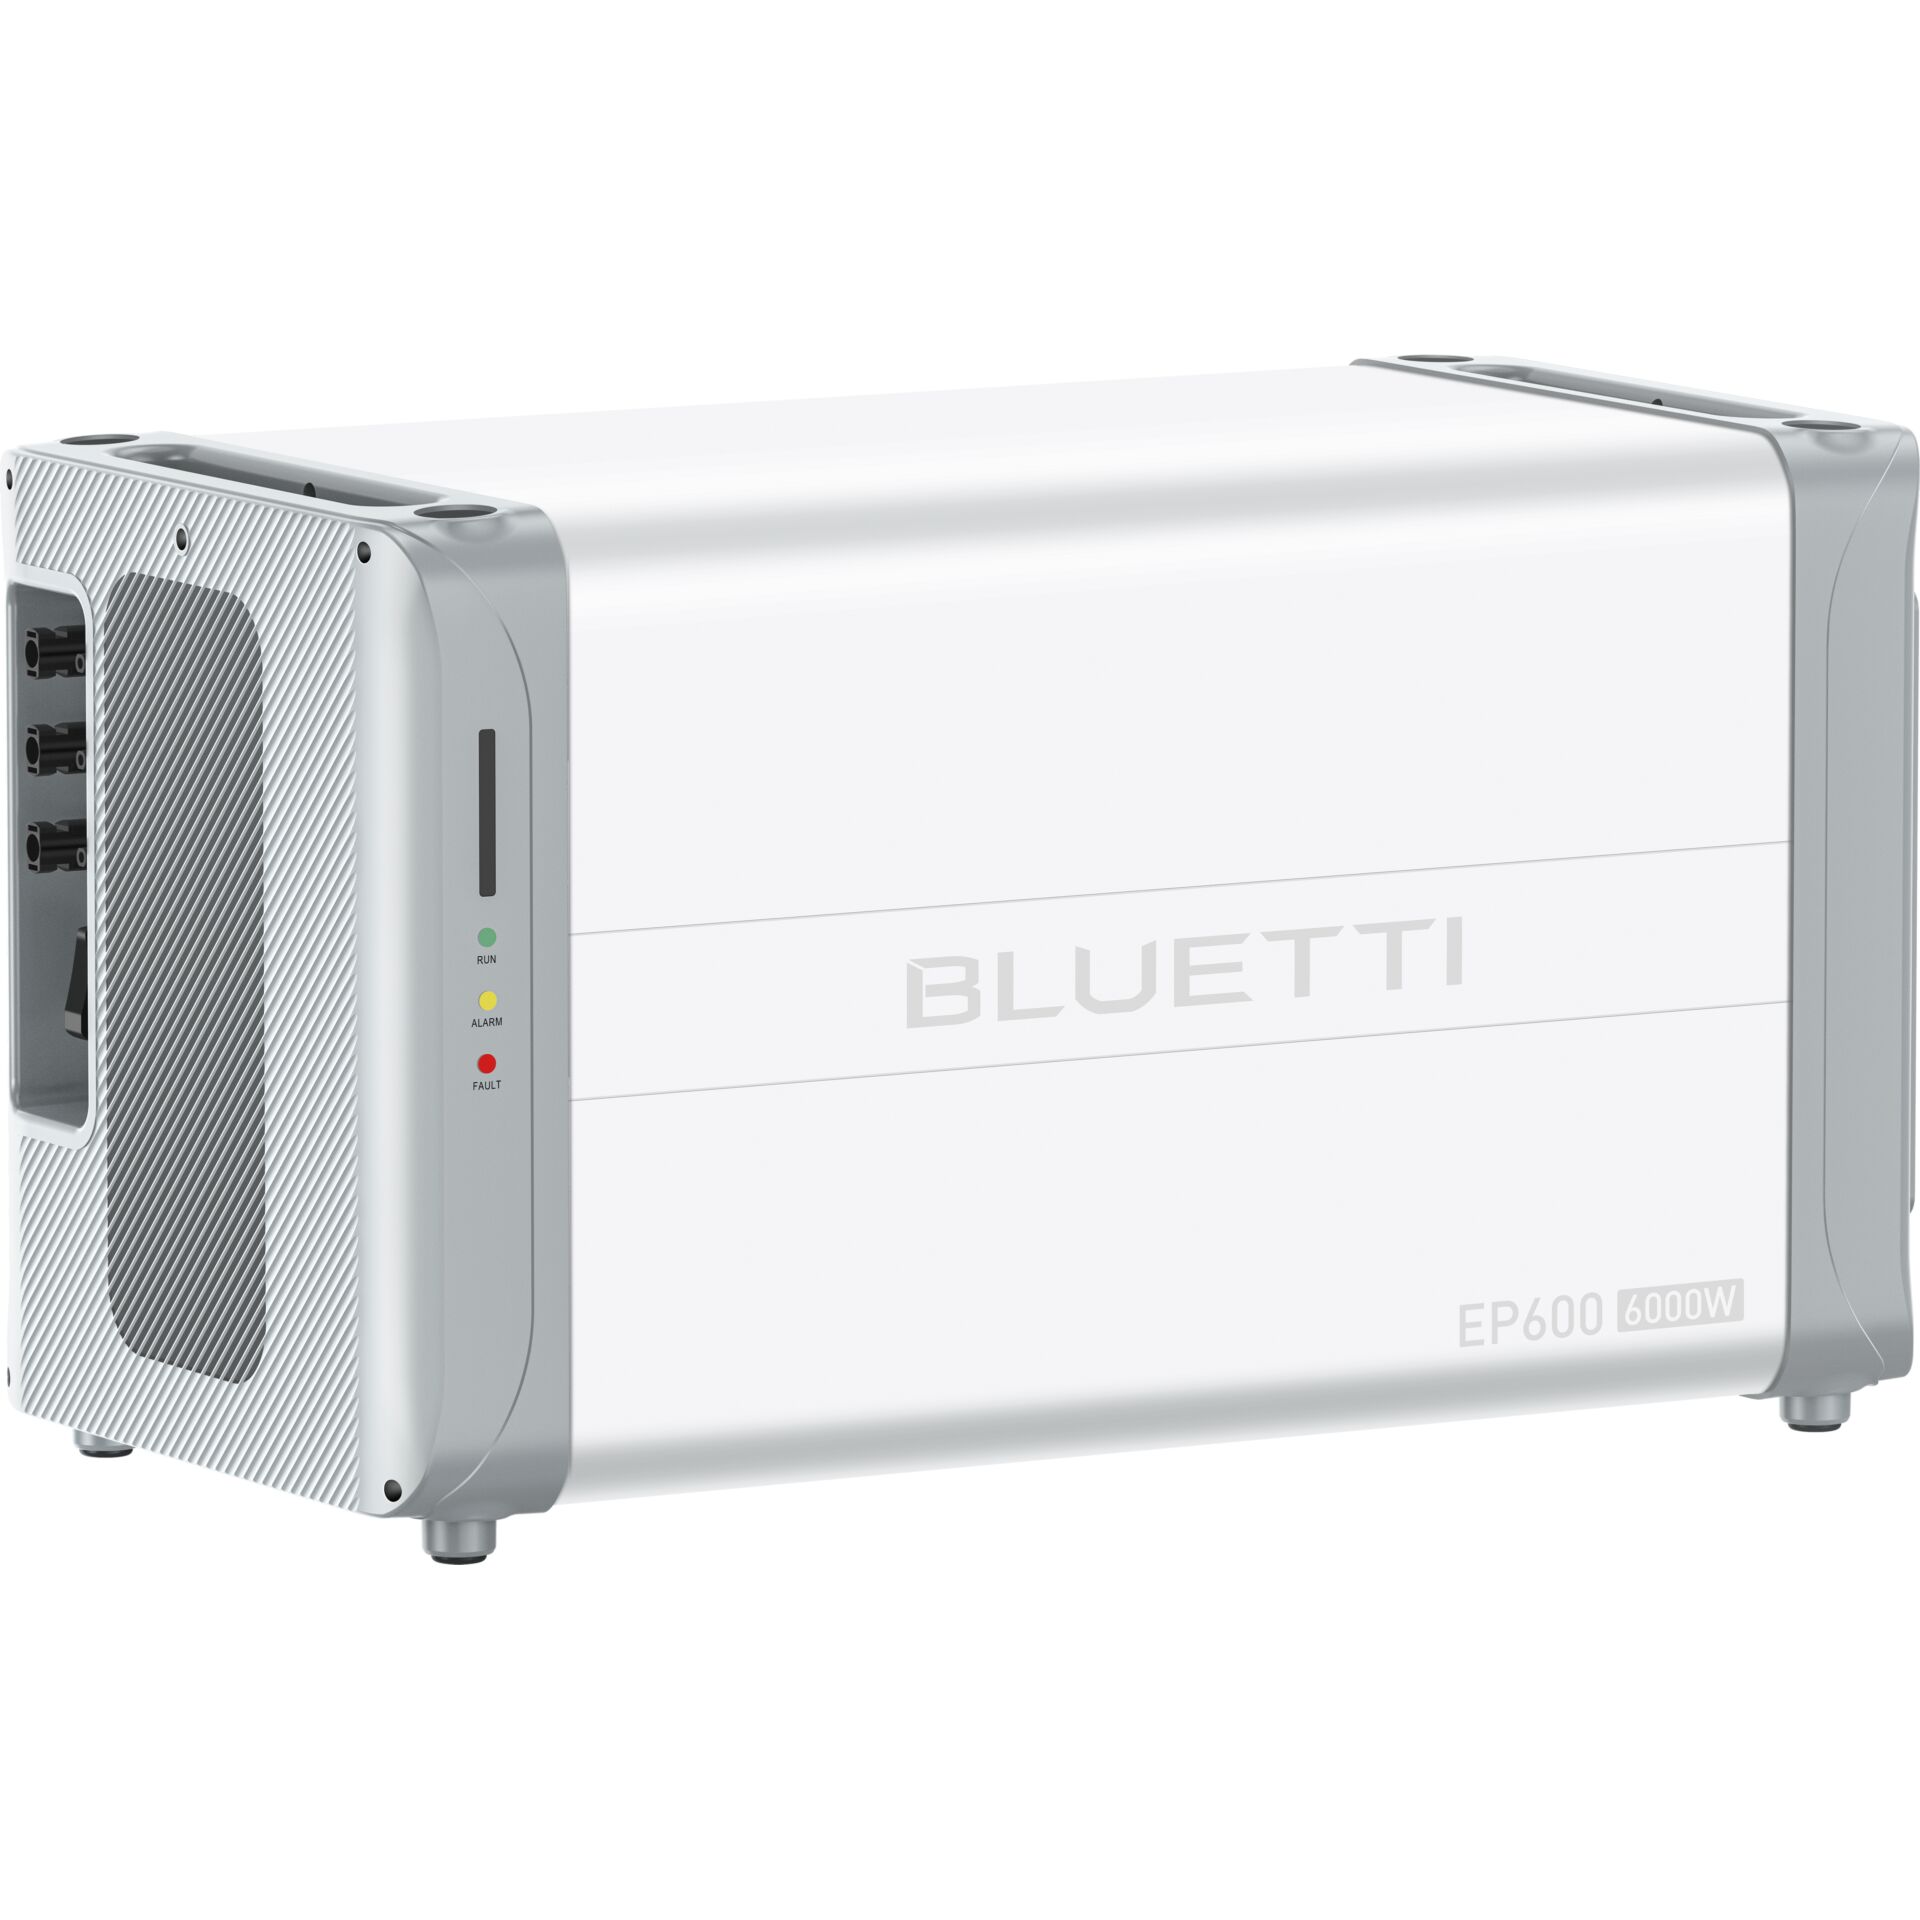 BLUETTI EP600 Energy Storage System